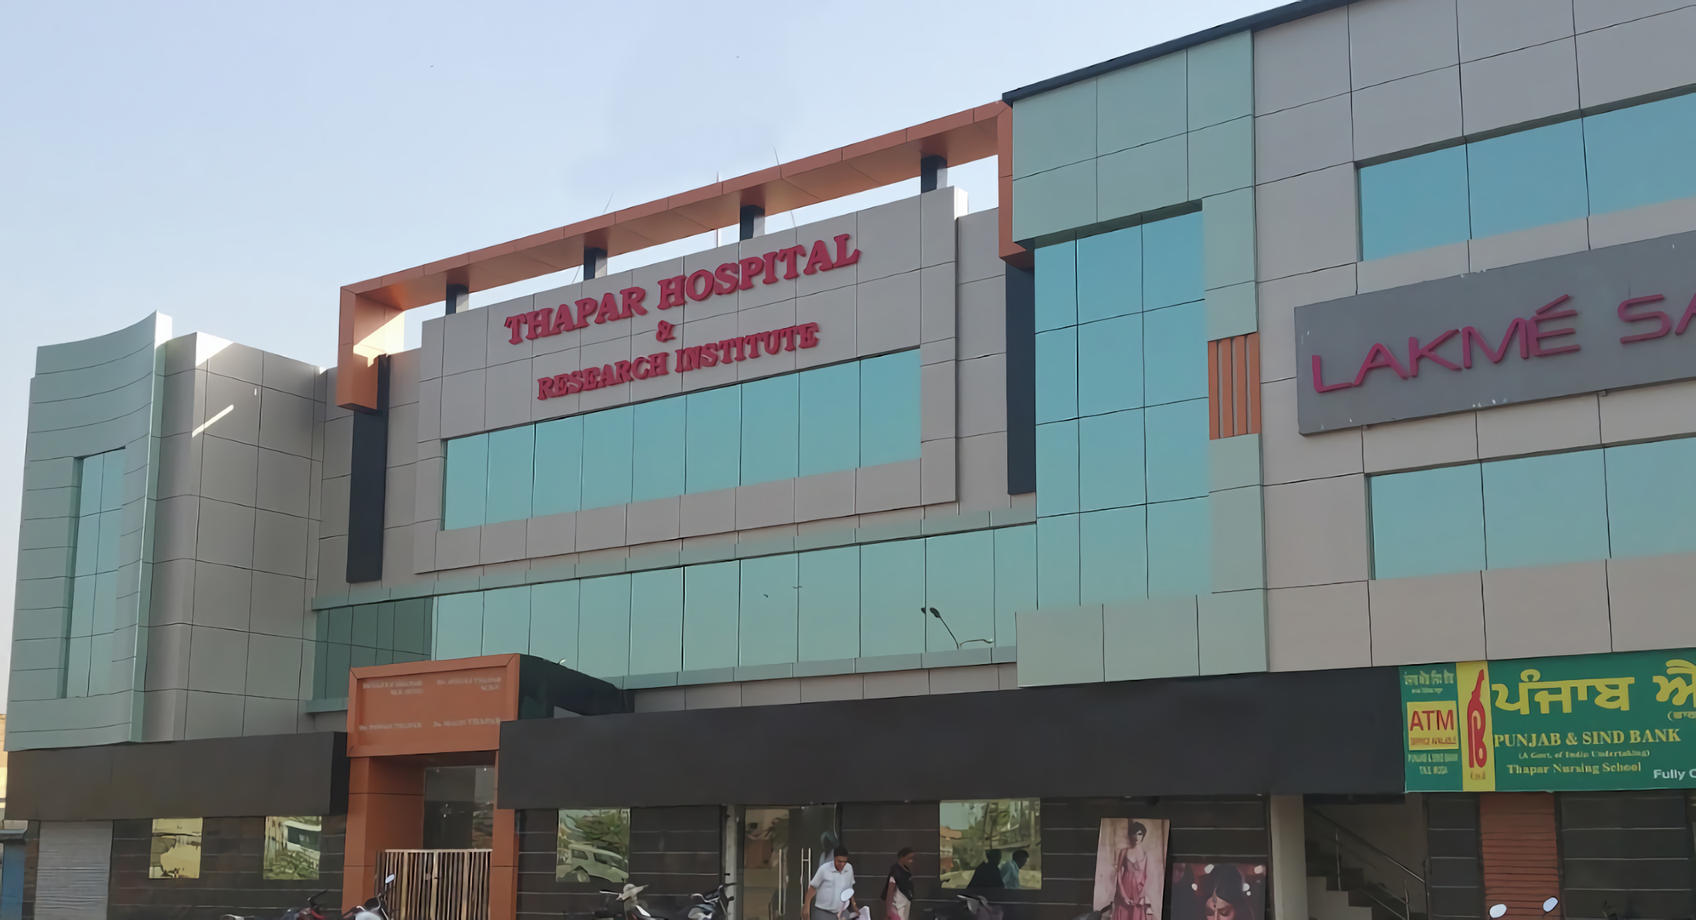 Thapar Hospital & Research Institure